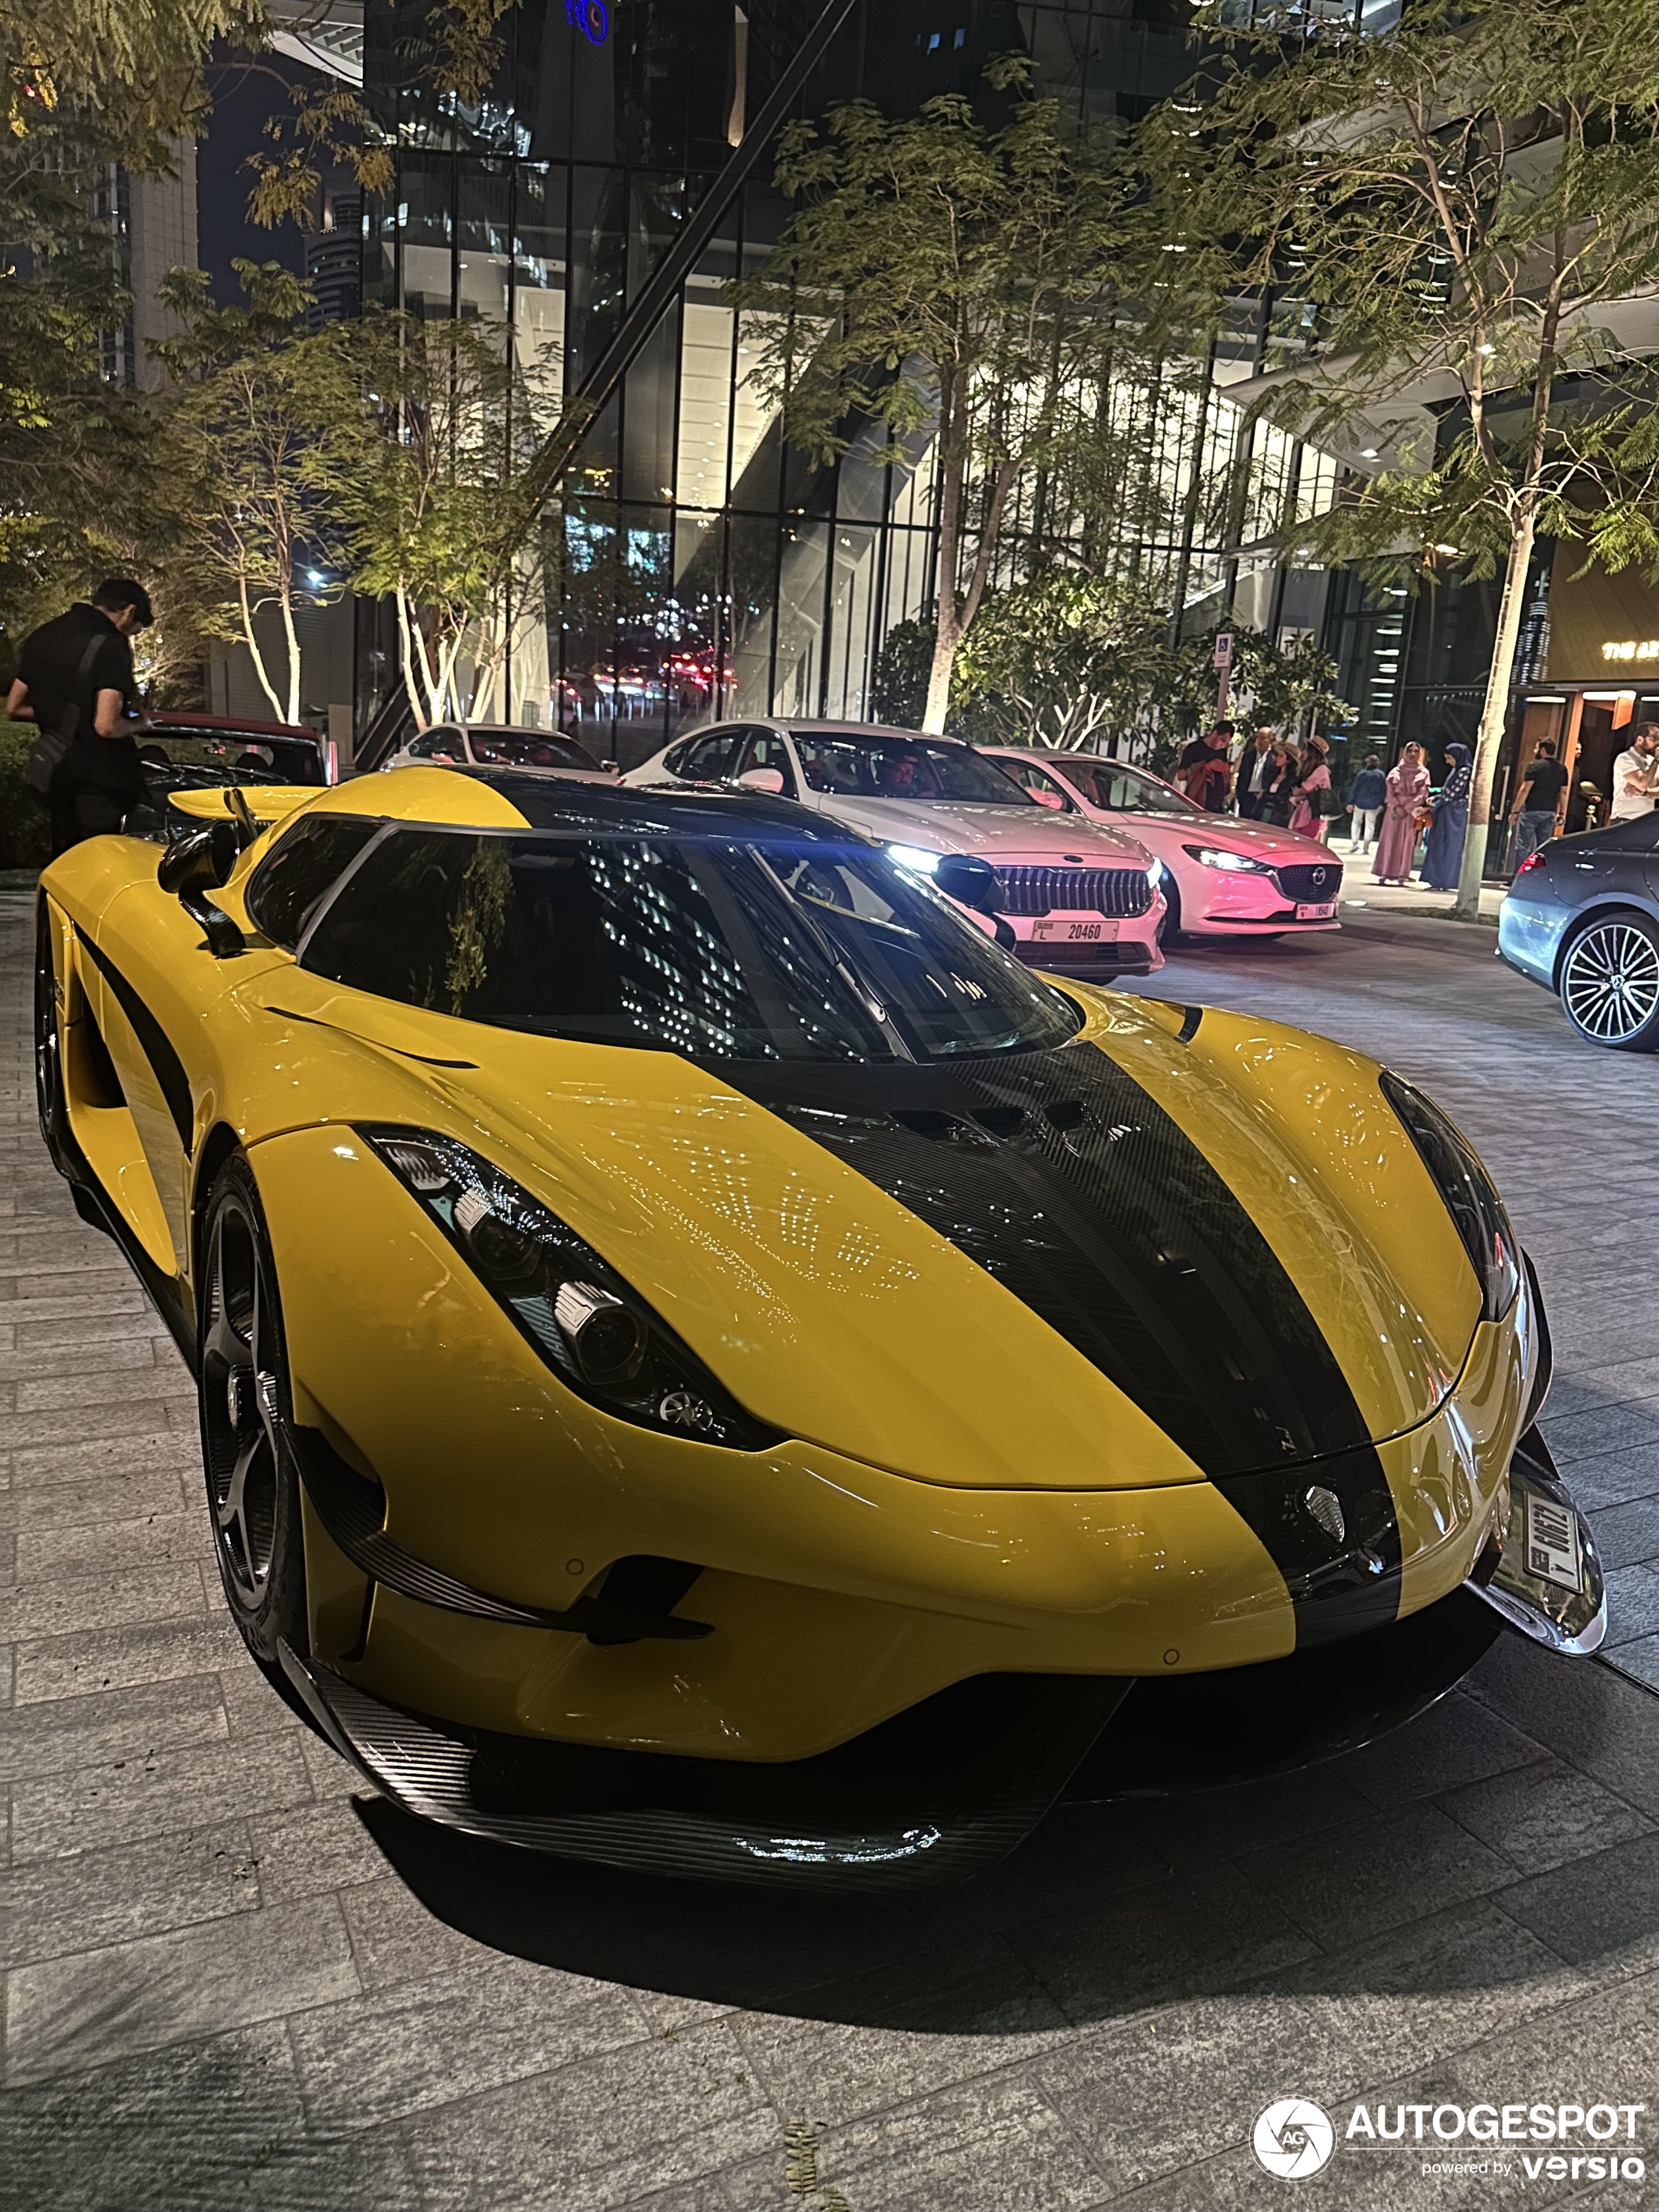 A yellow Regera shows up in Dubai